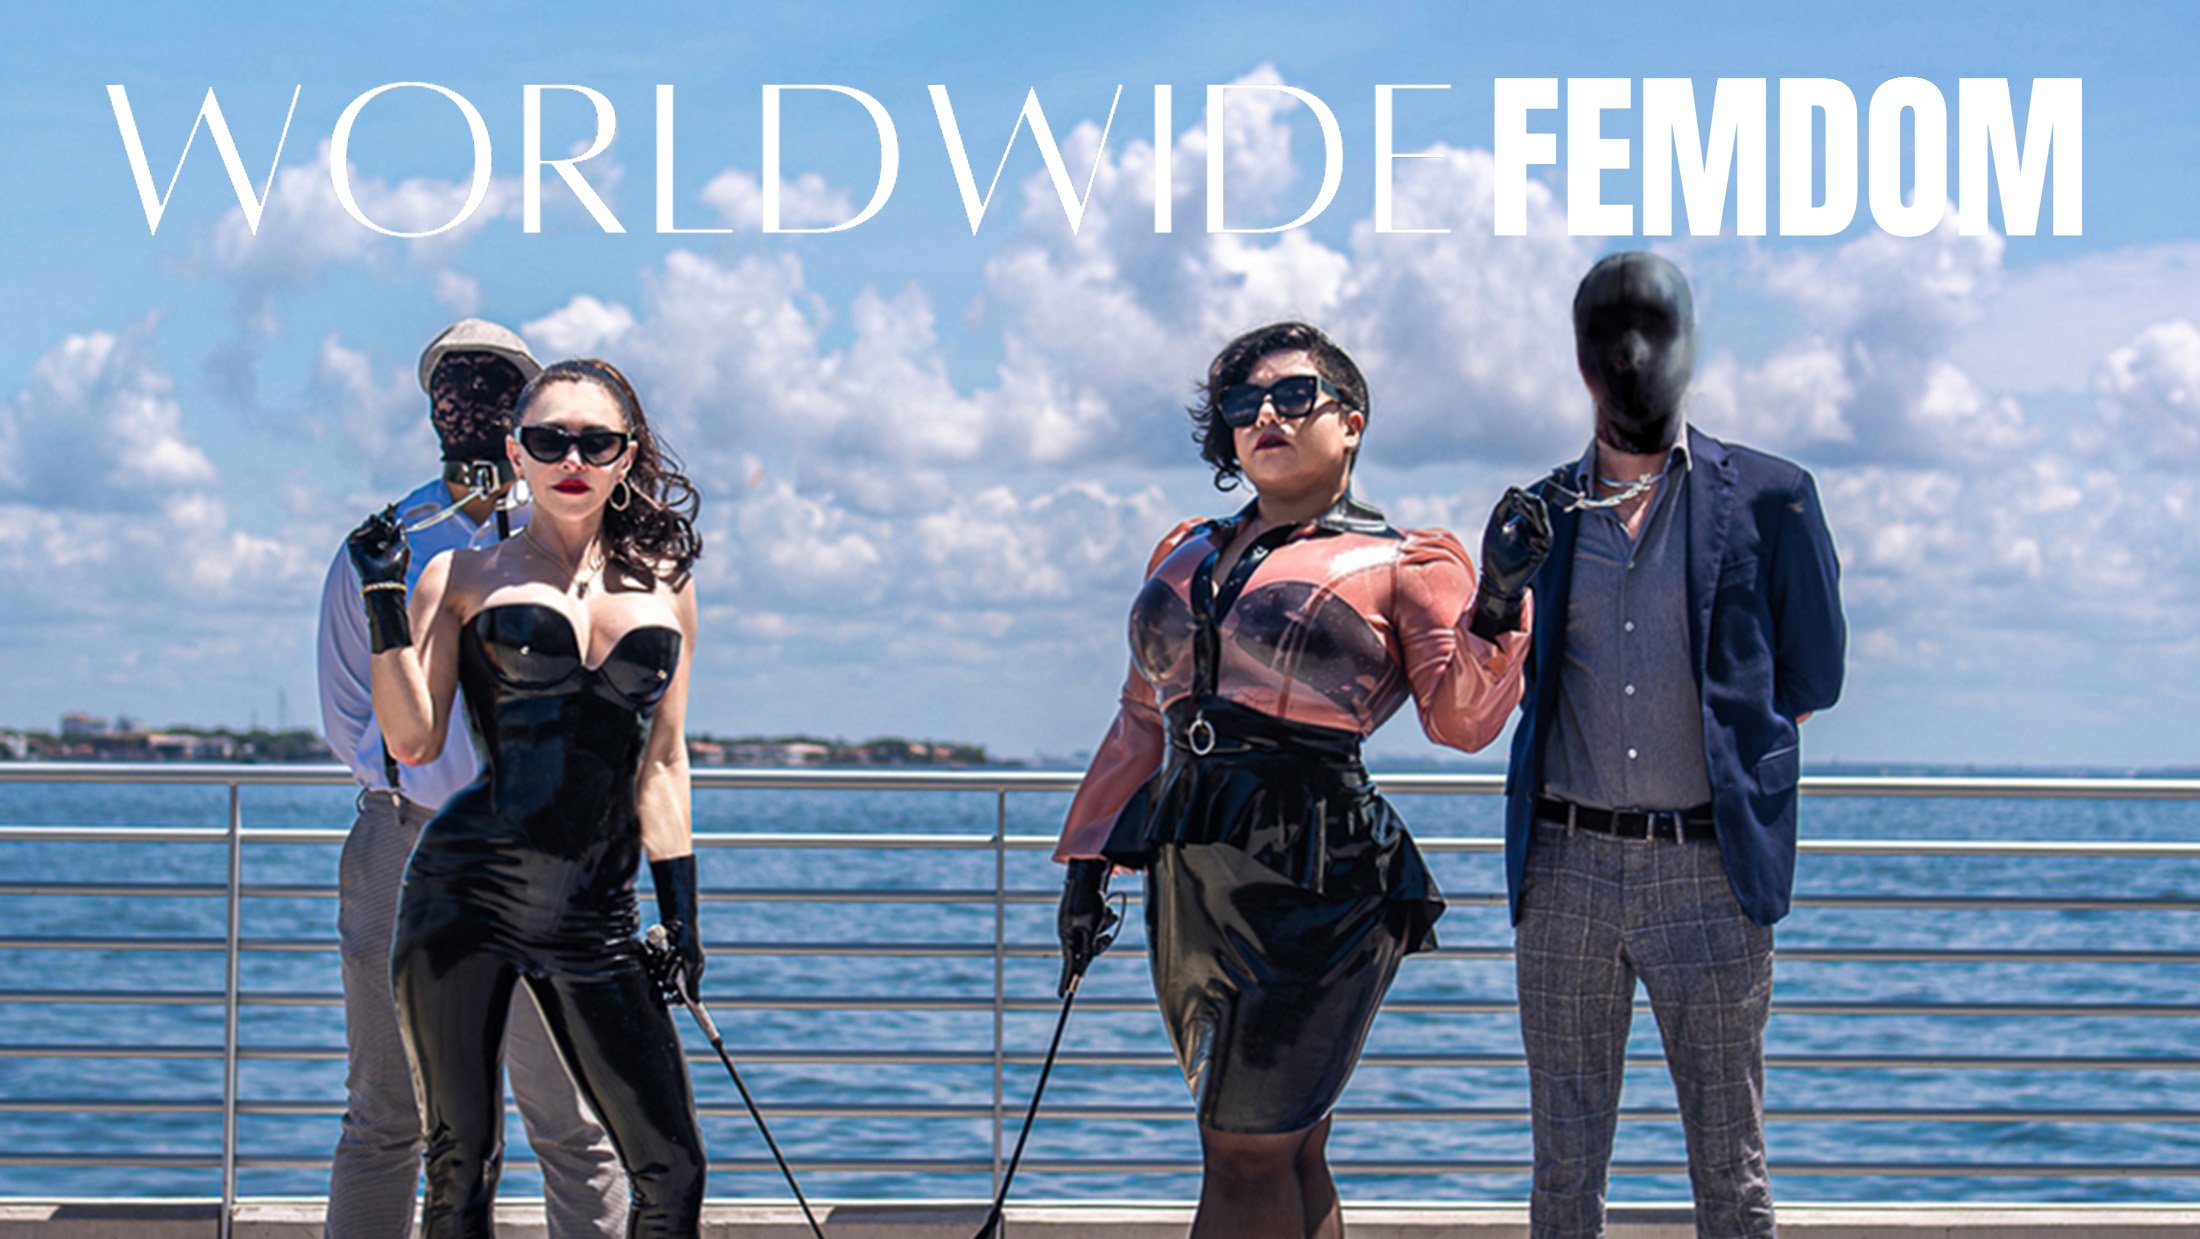 Worldwide Femdom